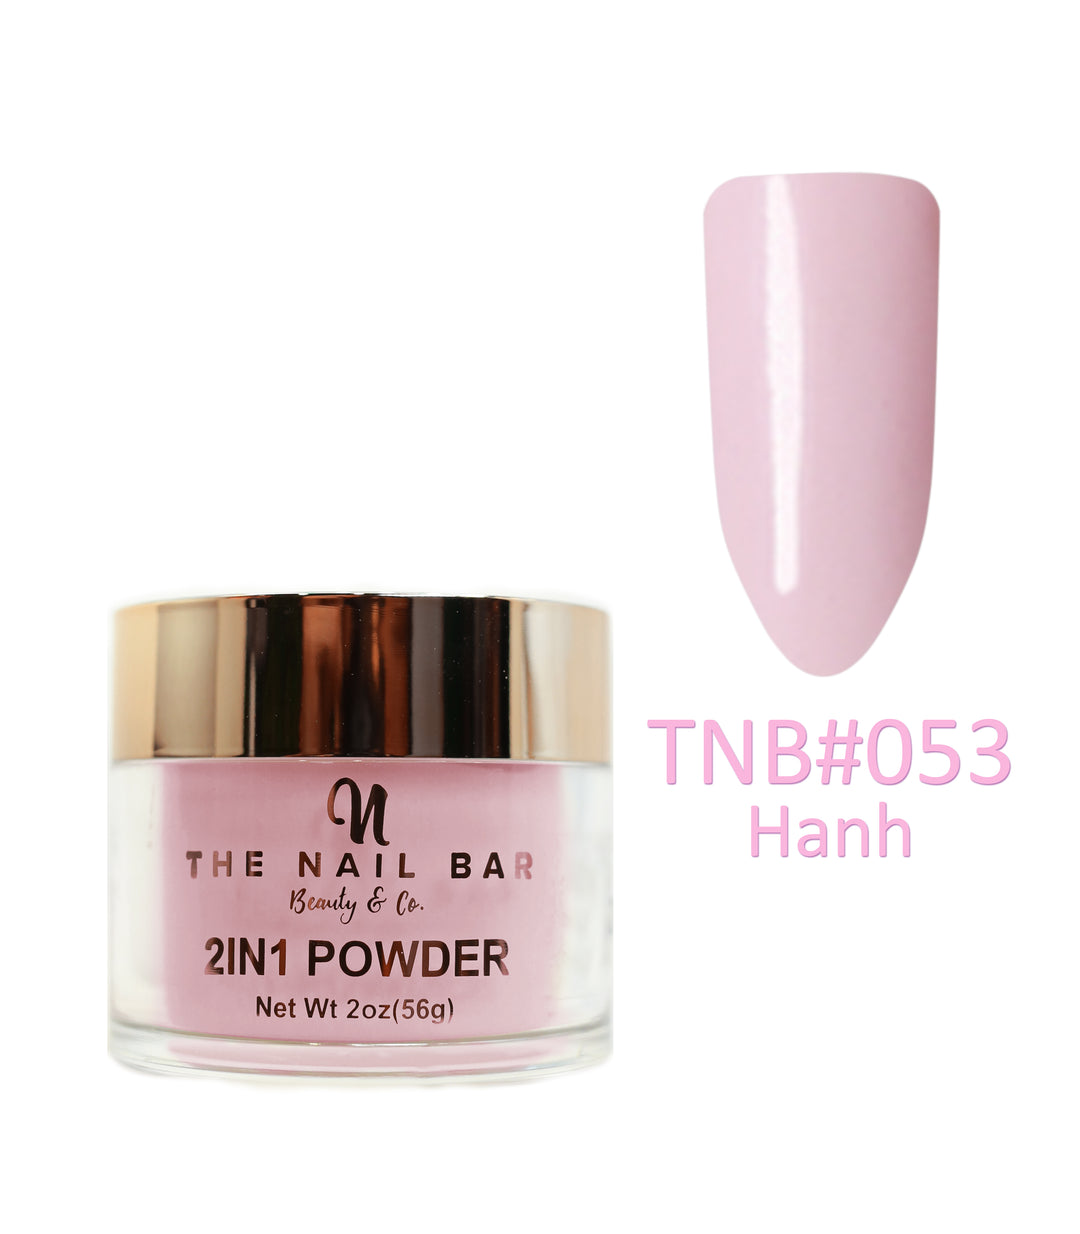 2-In-1 Dipping/Acrylic colour powder (2oz) -Hanh - The Nail Bar Beauty & Co.